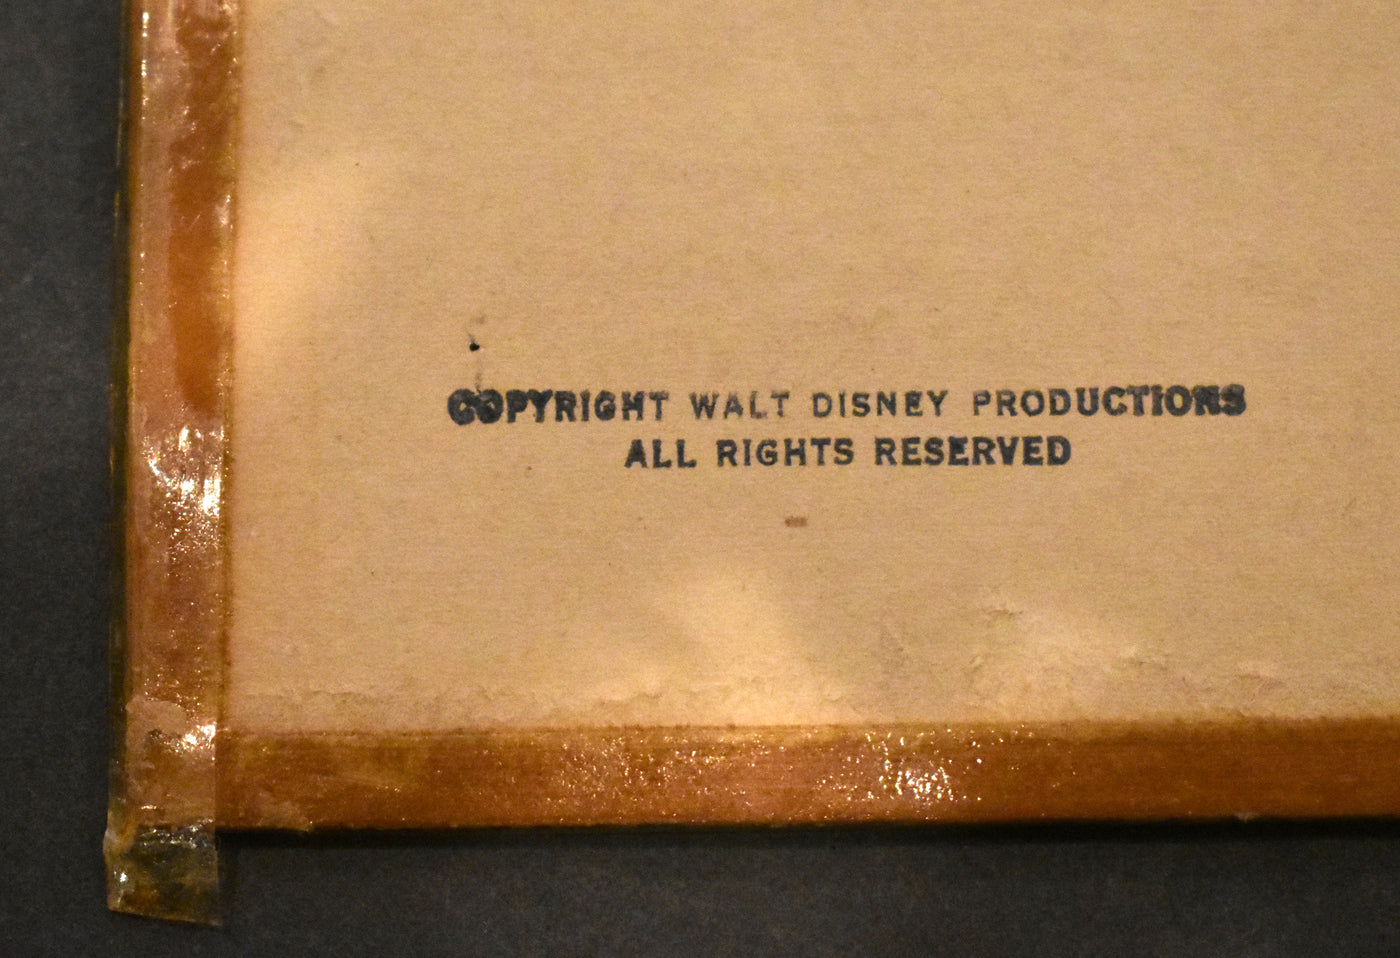 Original Walt Disney Production Cel on Courvoisier Background from Fantasia